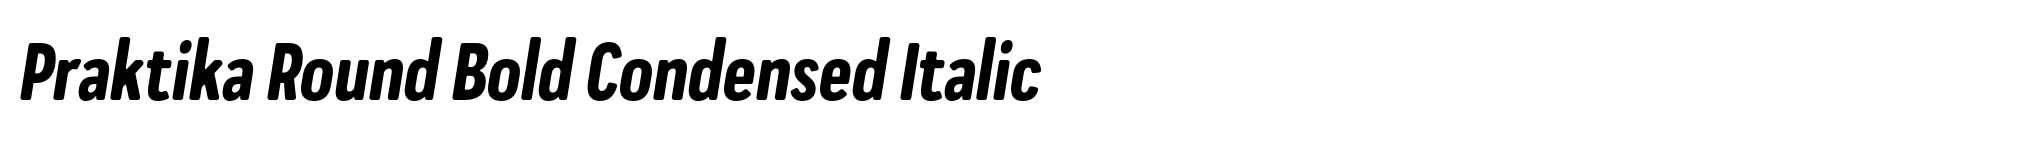 Praktika Round Bold Condensed Italic image